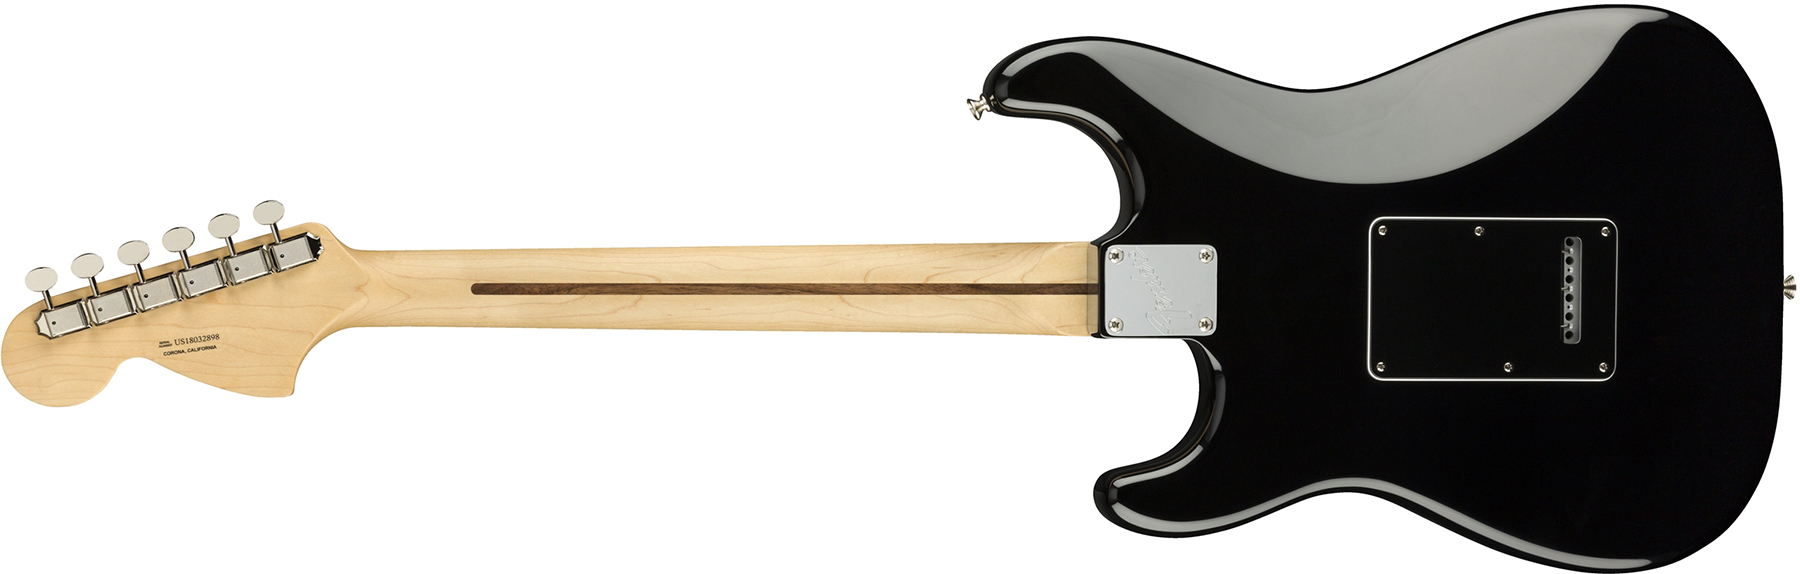 Fender Strat American Performer Usa Hss Mn - Black - E-Gitarre in Str-Form - Variation 1